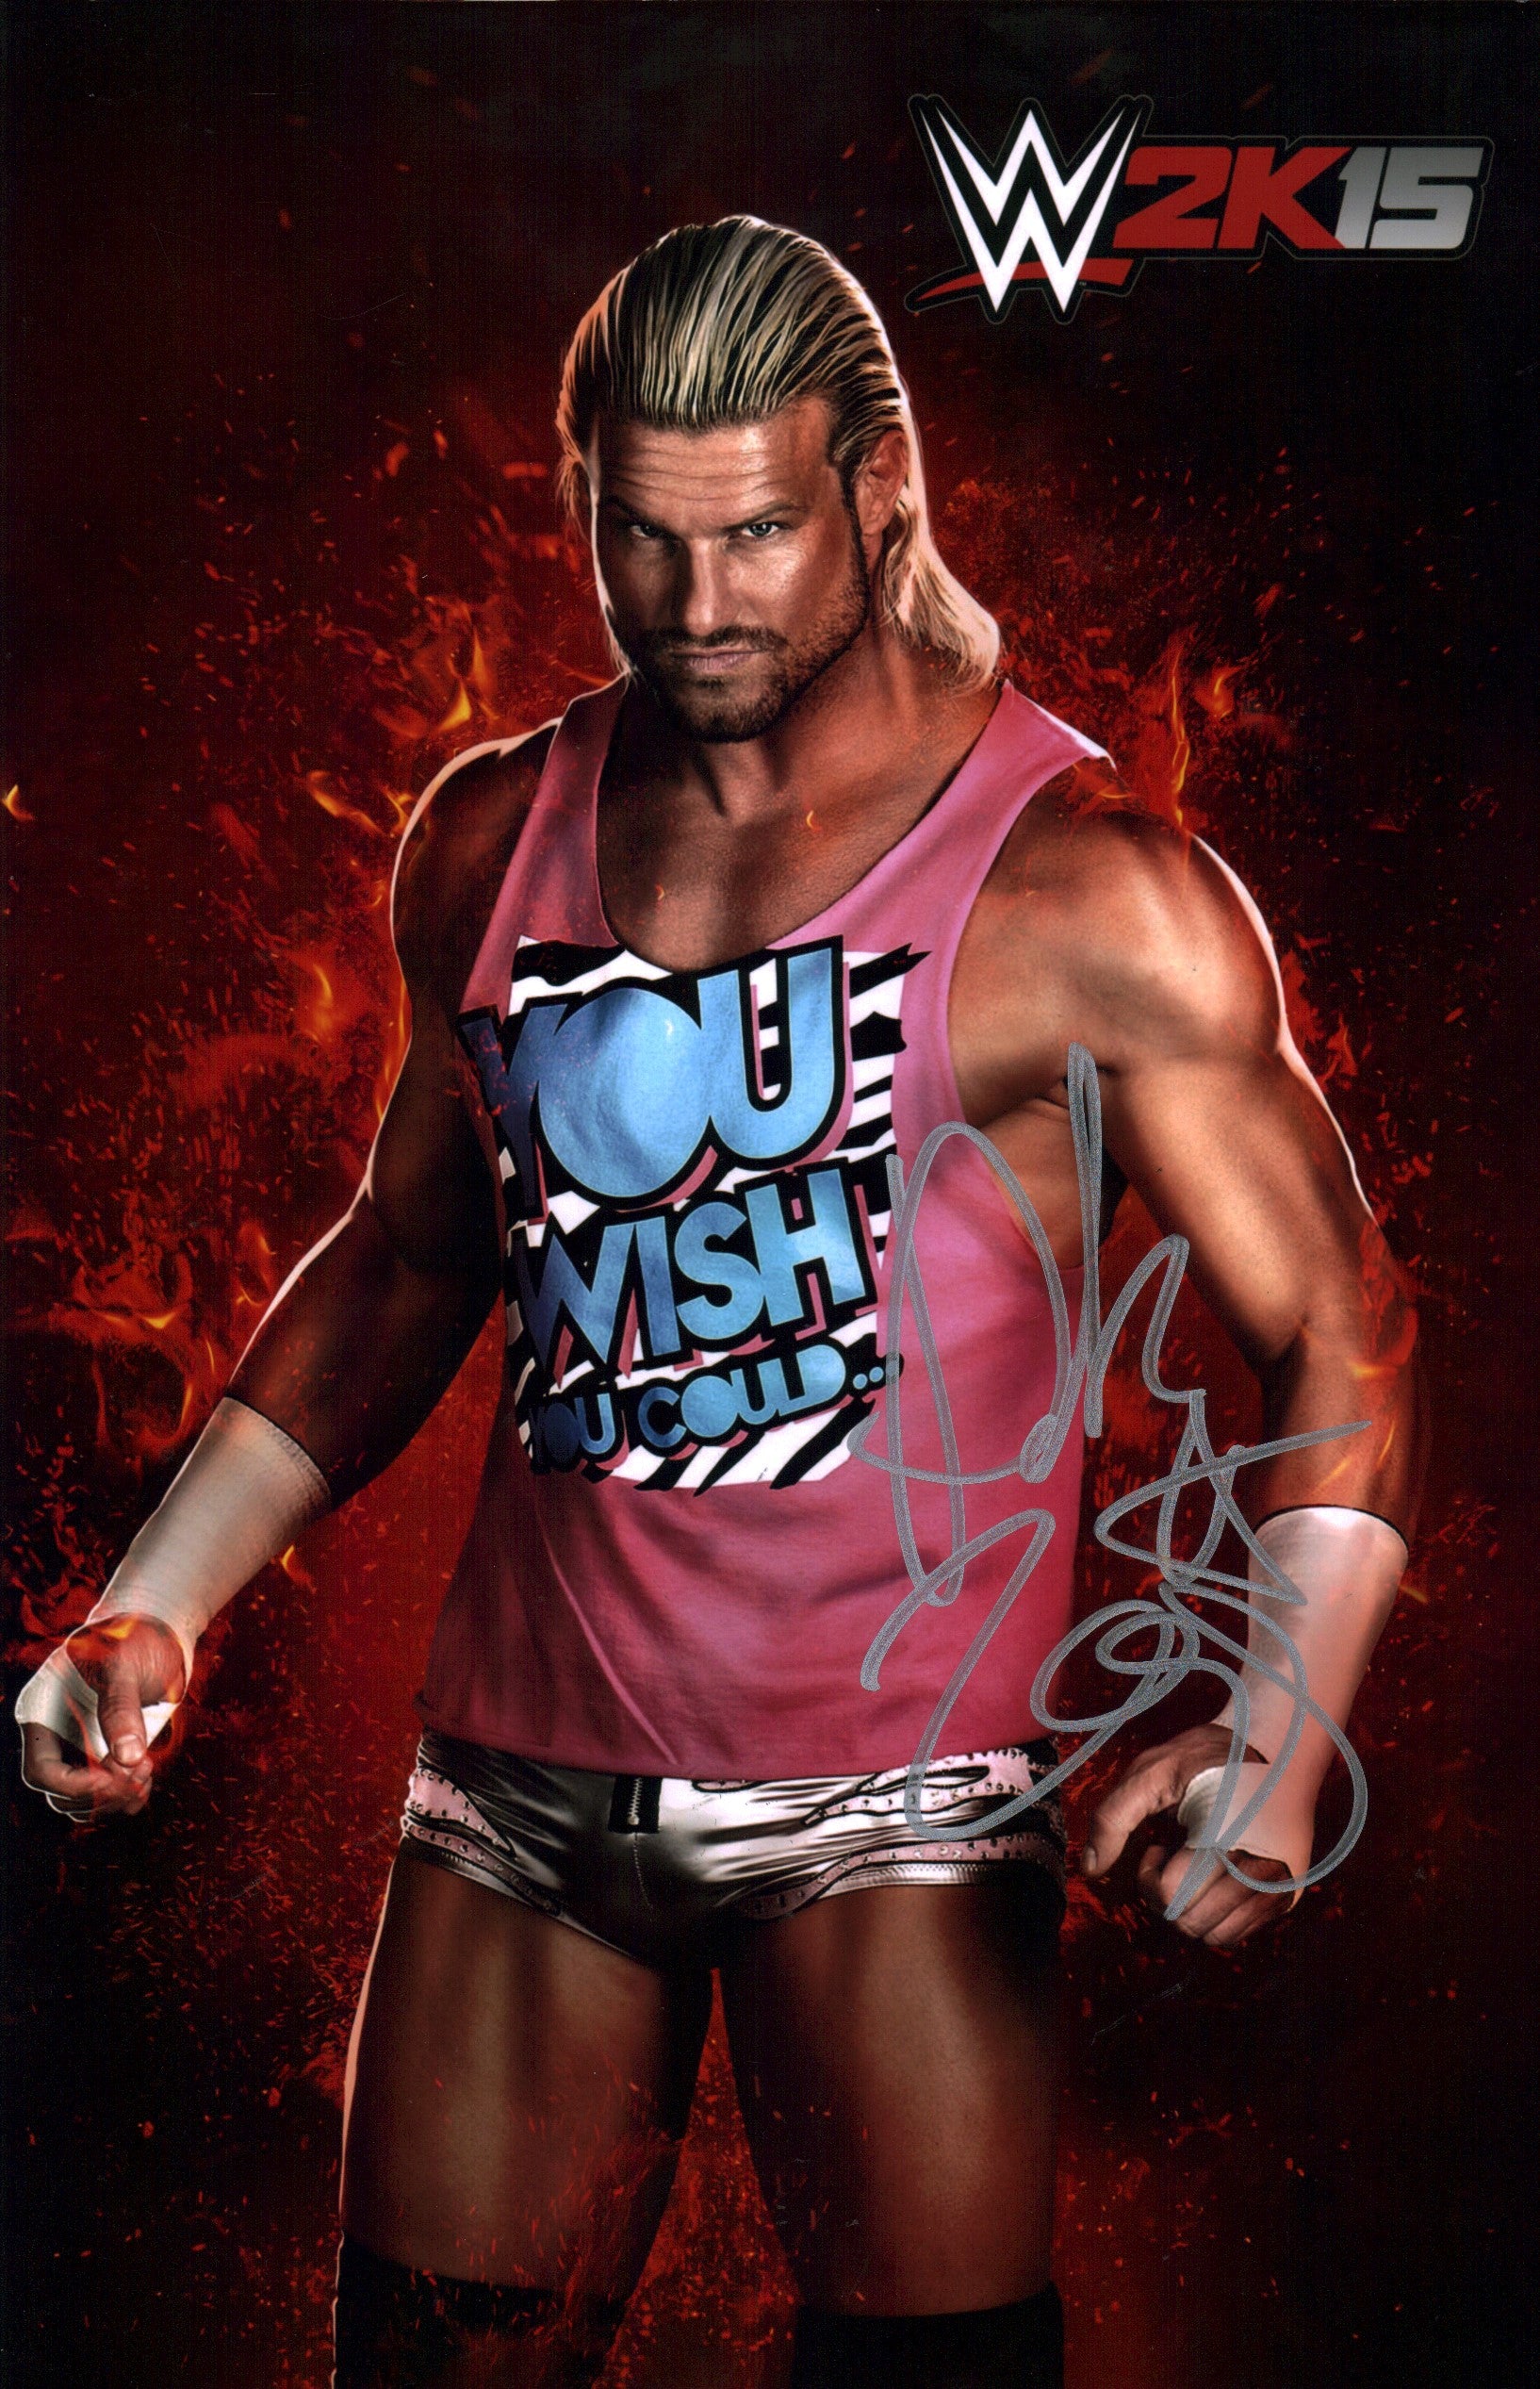 Dolph Ziggler WWE Wrestling 11x17 Signed Photo Poster JSA Certified Autograph